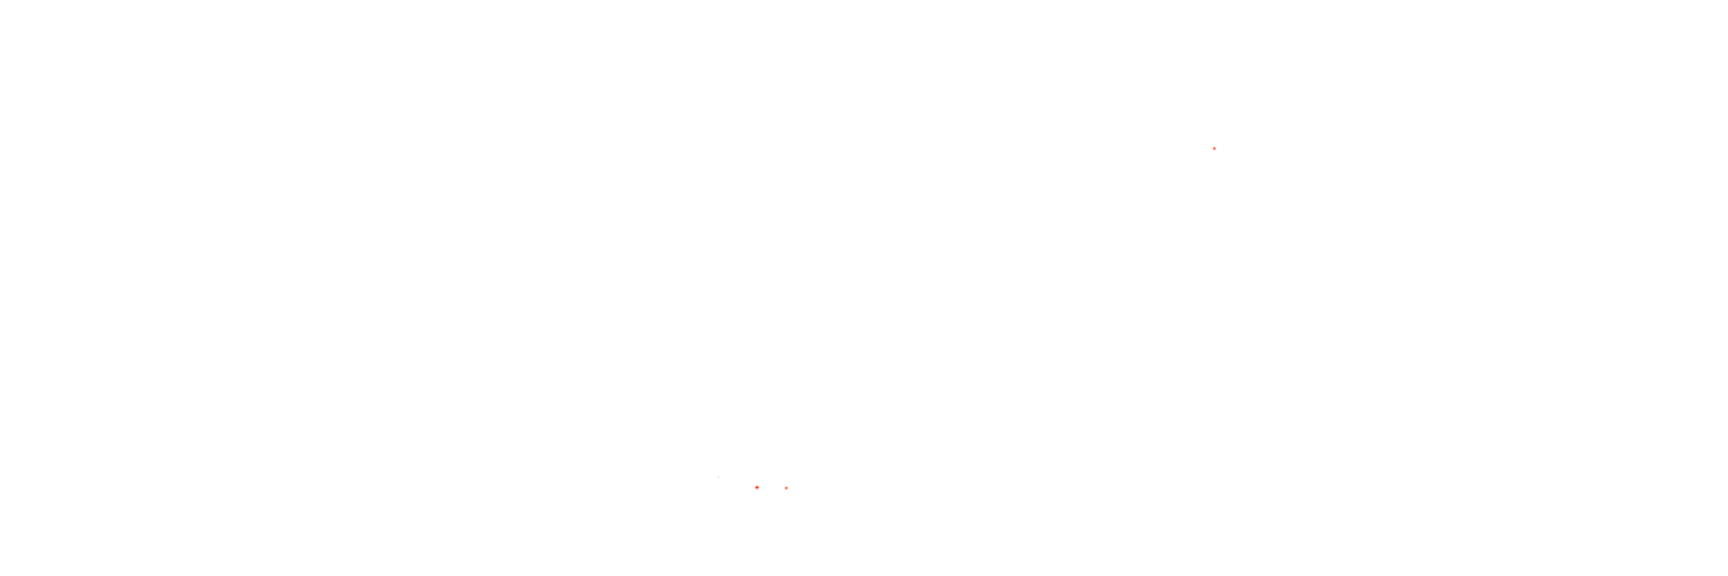 Kelly Summersett: Life Coach for Professional Women